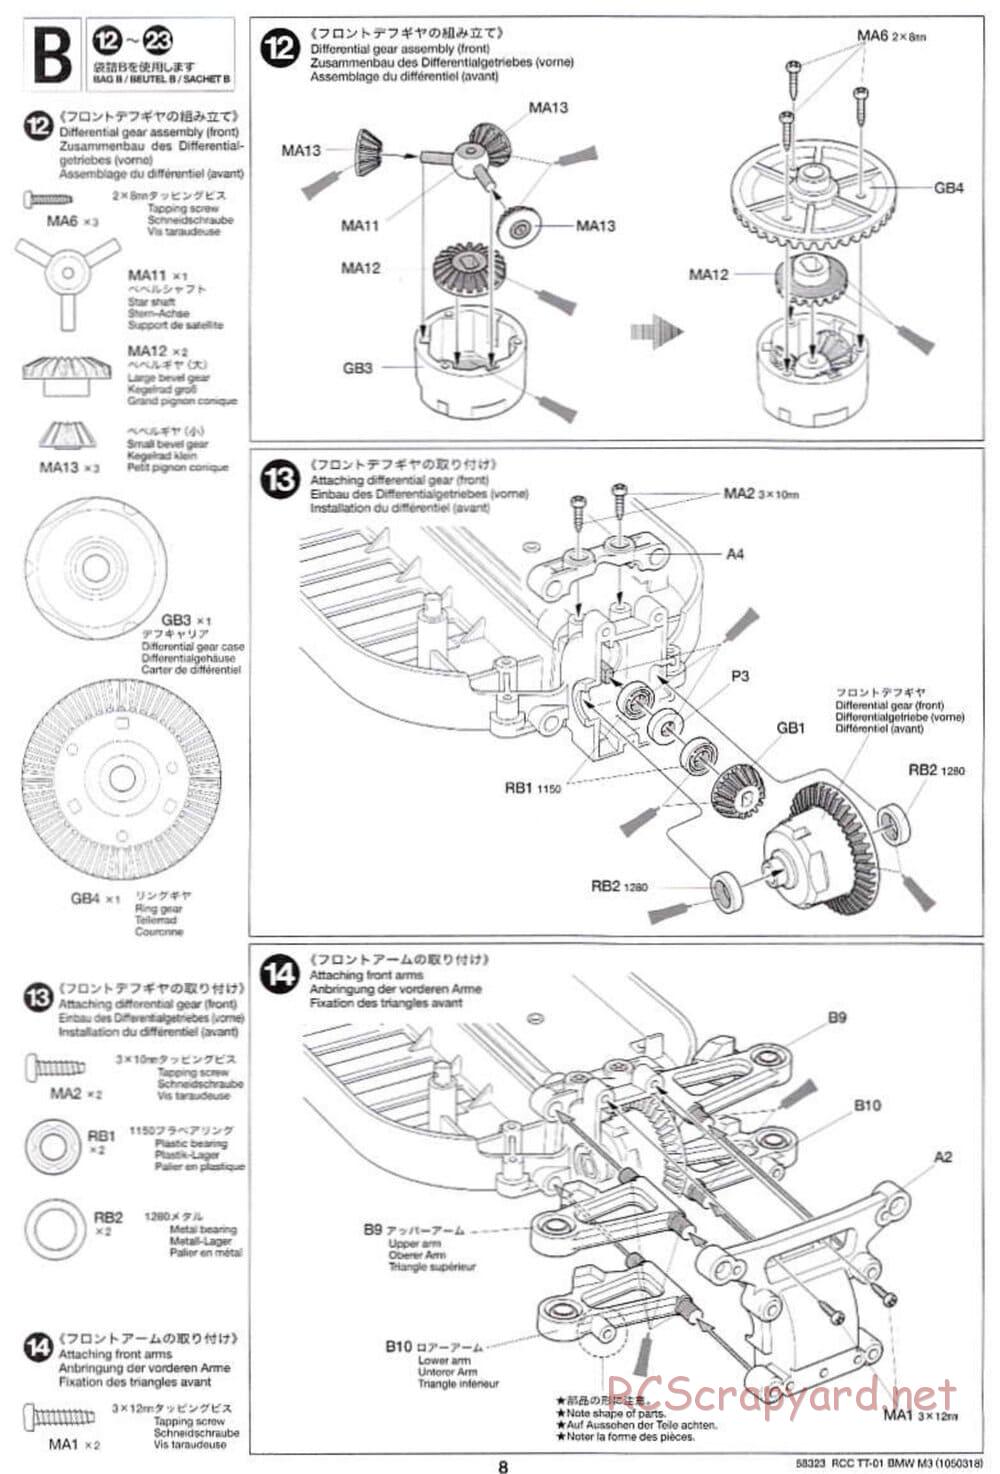 Tamiya - Schnitzer BMW M3 Sport Evo - TT-01 Chassis - Manual - Page 8